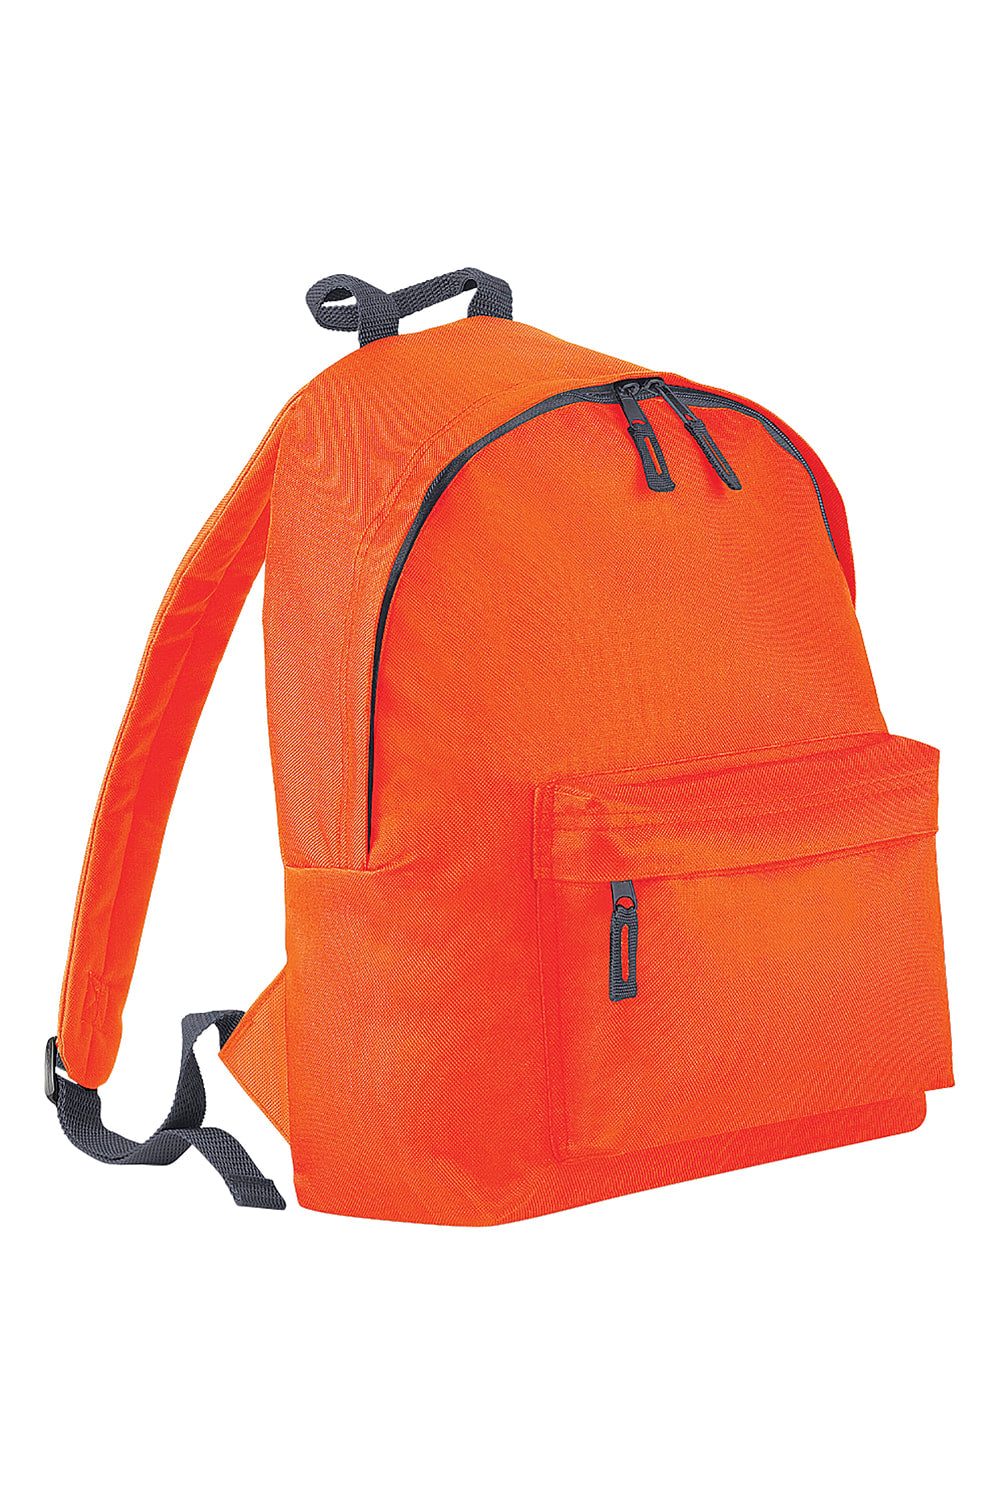 Fashion Backpack/Rucksack,18 Liters - Orange/Graphite Gray